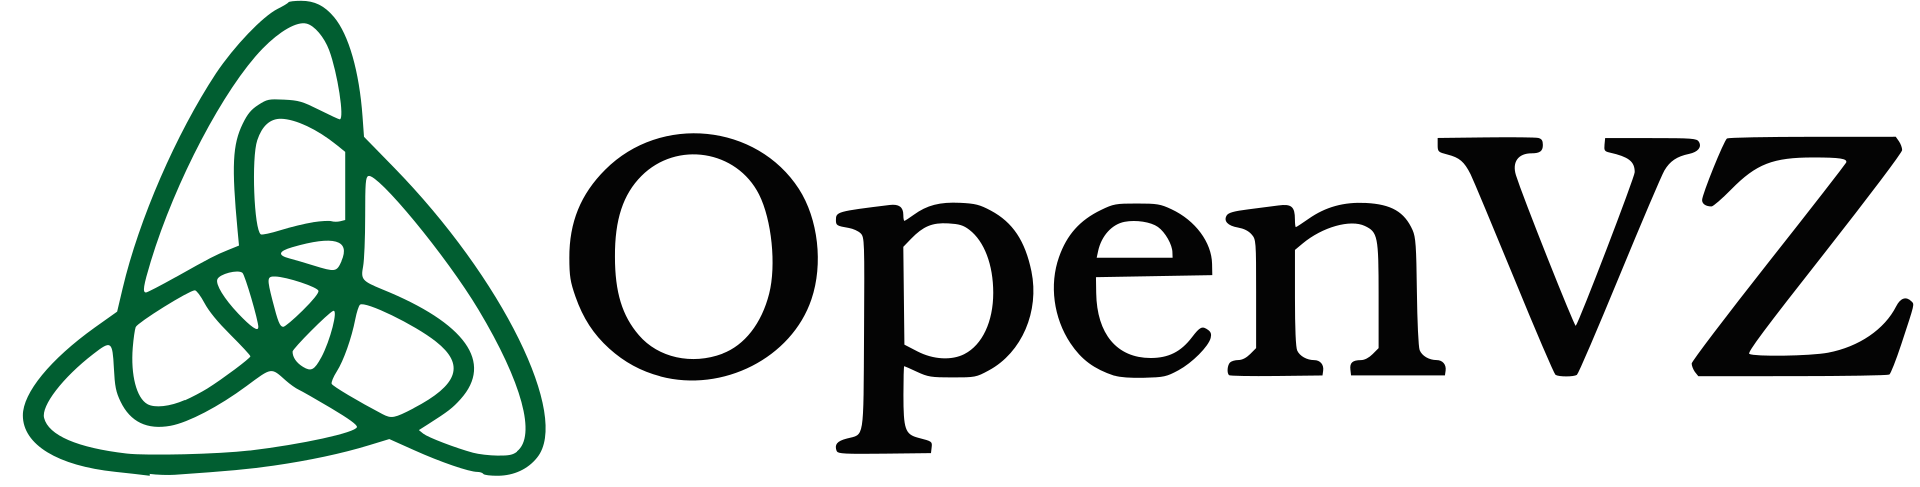 OpenVZ-logo.svg